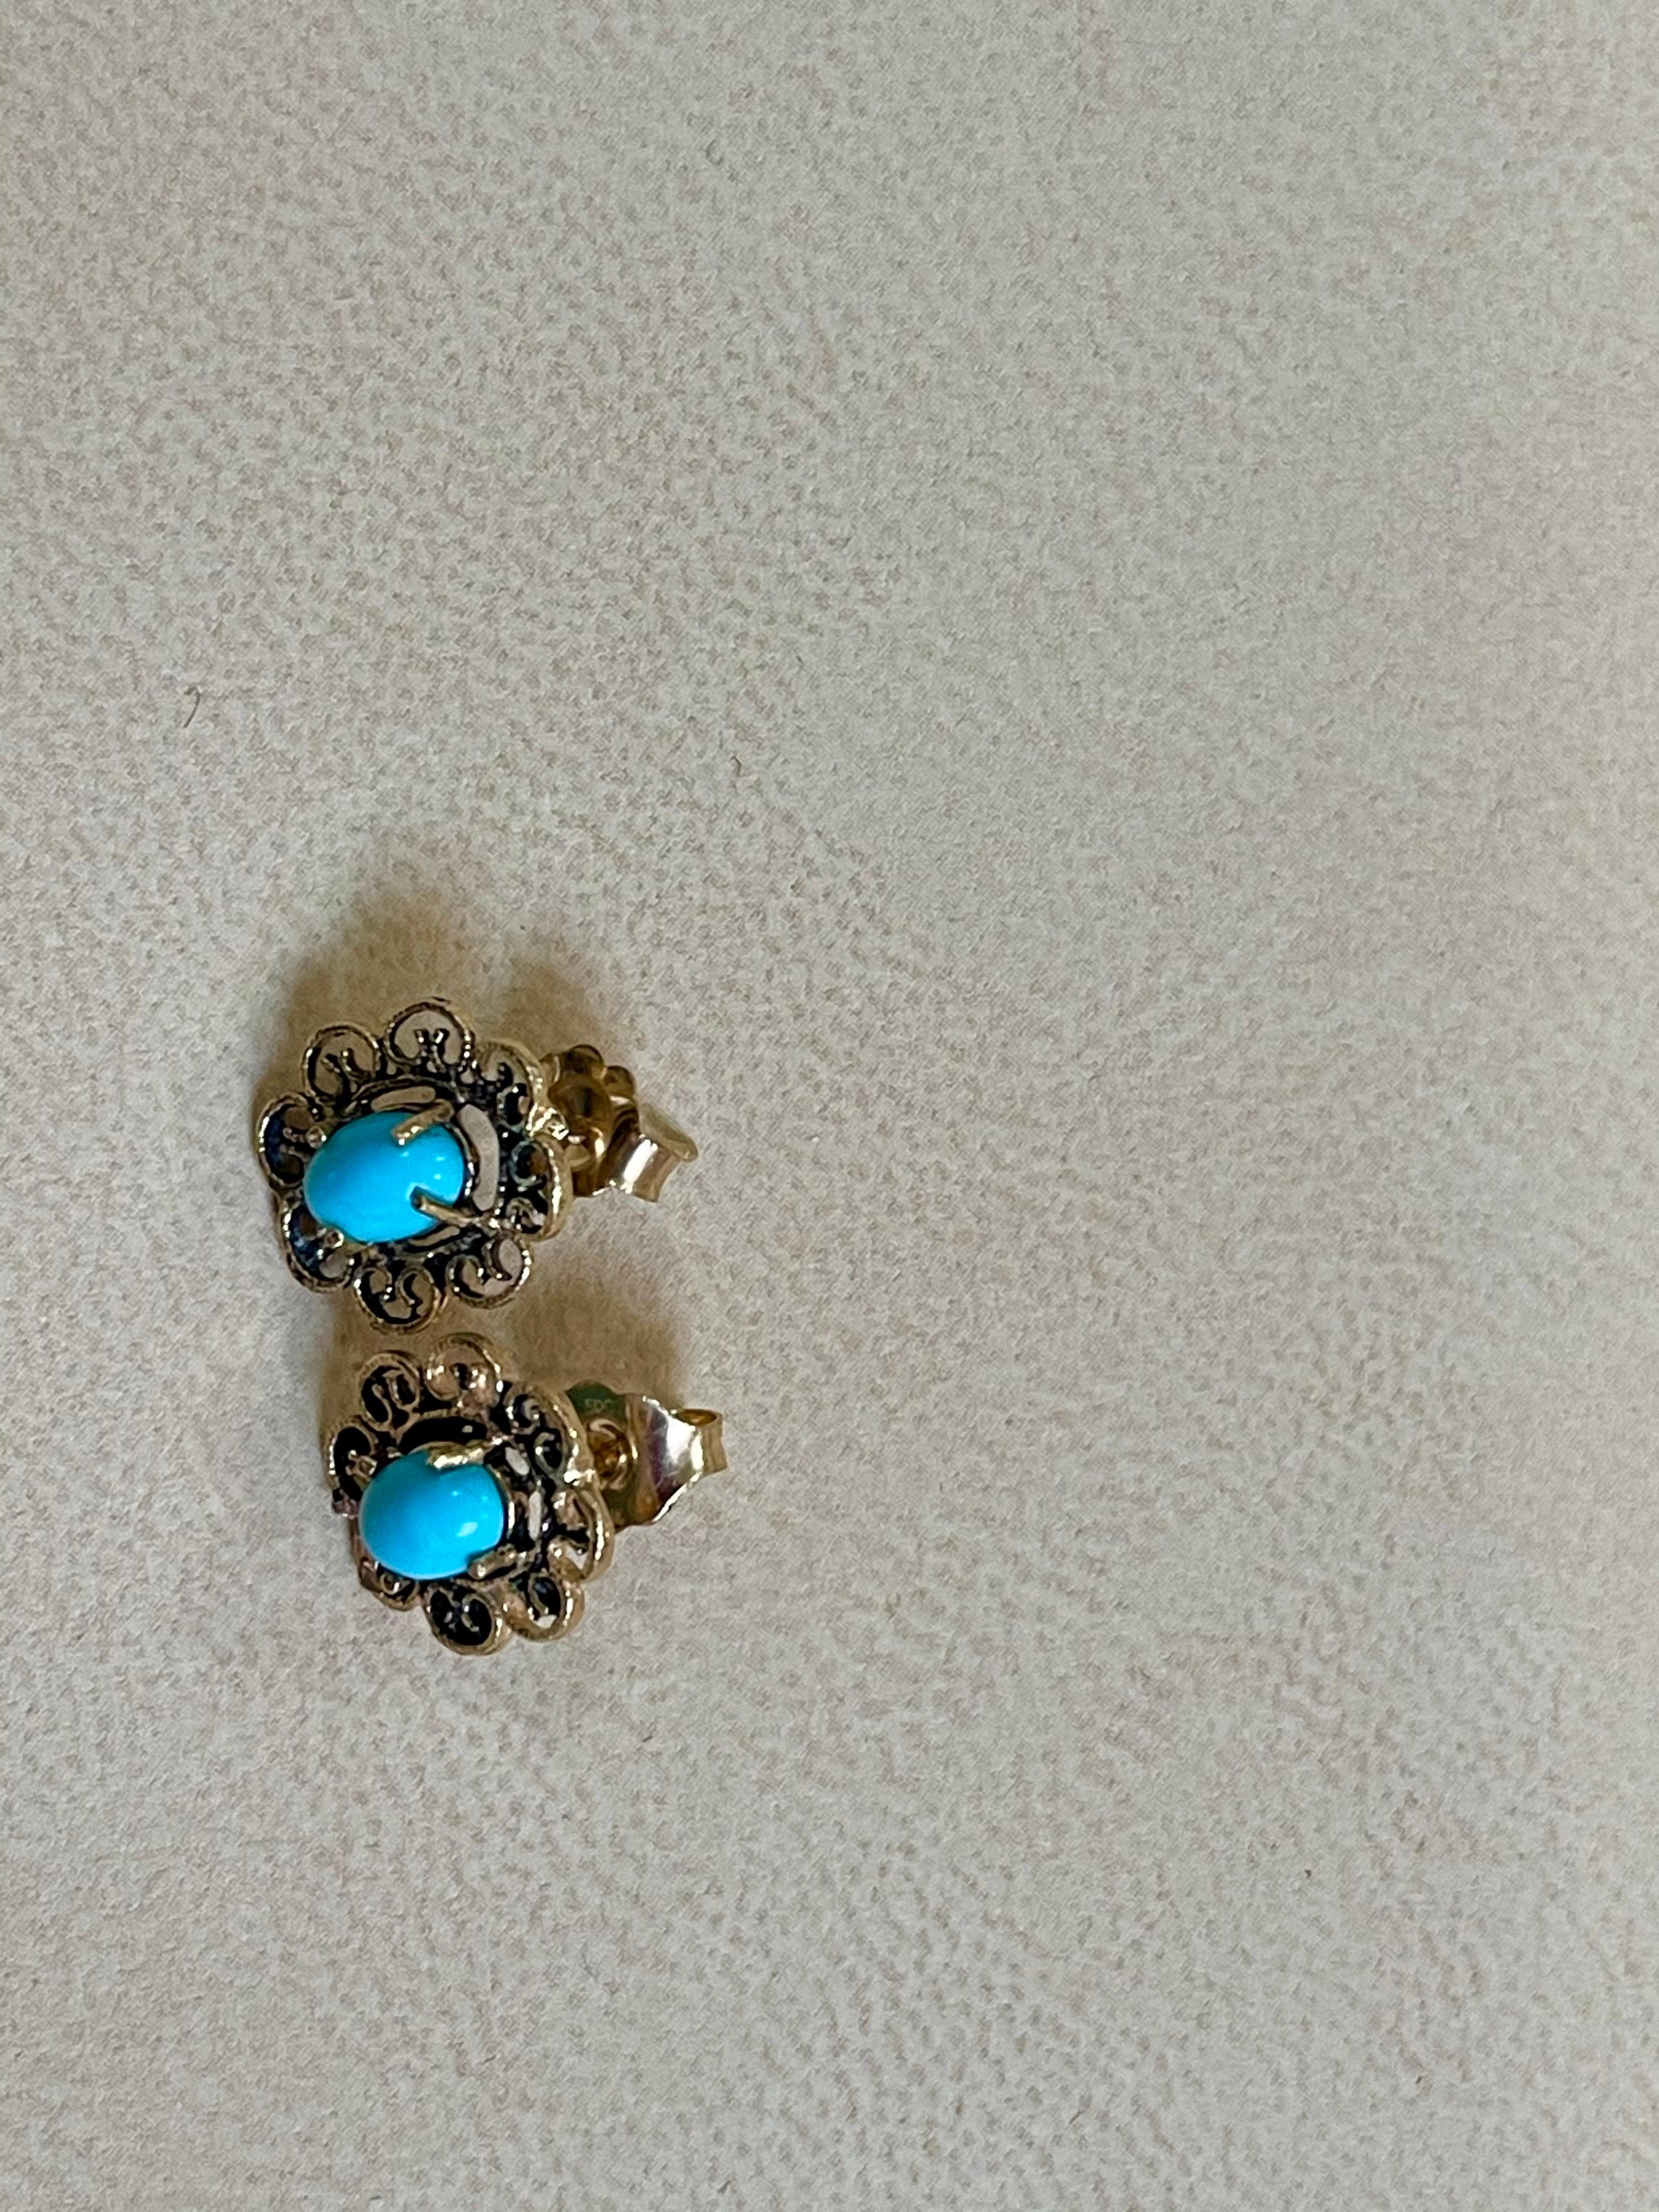 Oval Cut 1 Carat Turquoise 14 Karat Yellow Gold Earrings, Stud Post Earring, Vintage